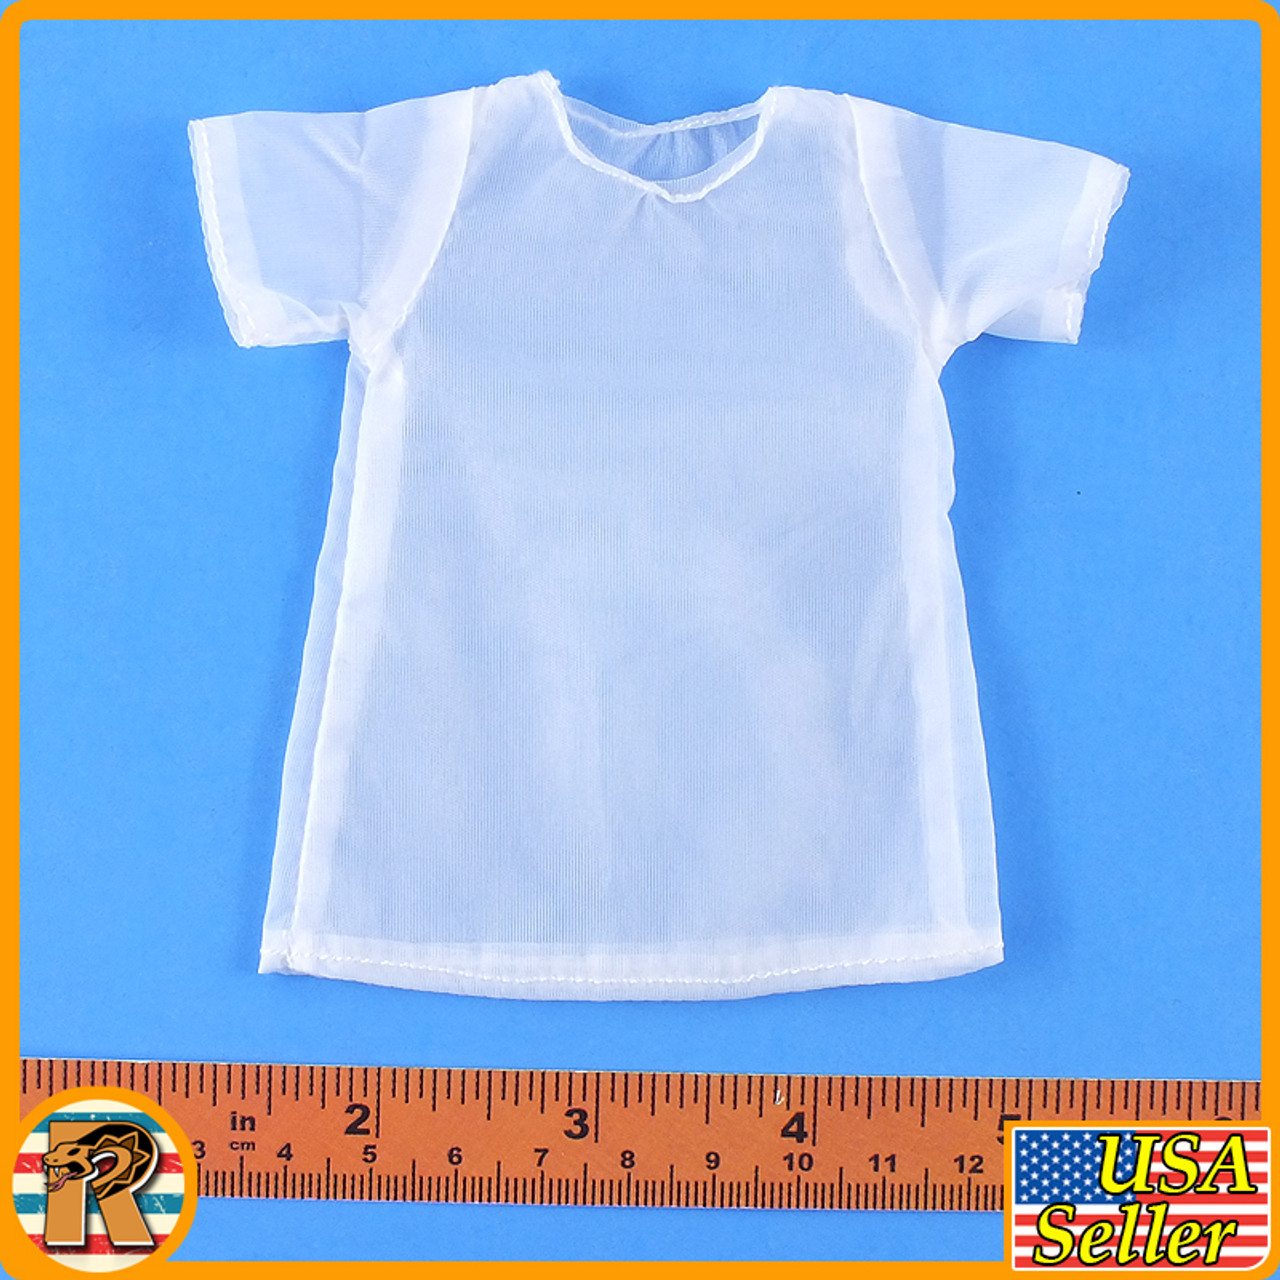 S45 - Female White Sheer Shirt - 1/6 Scale -